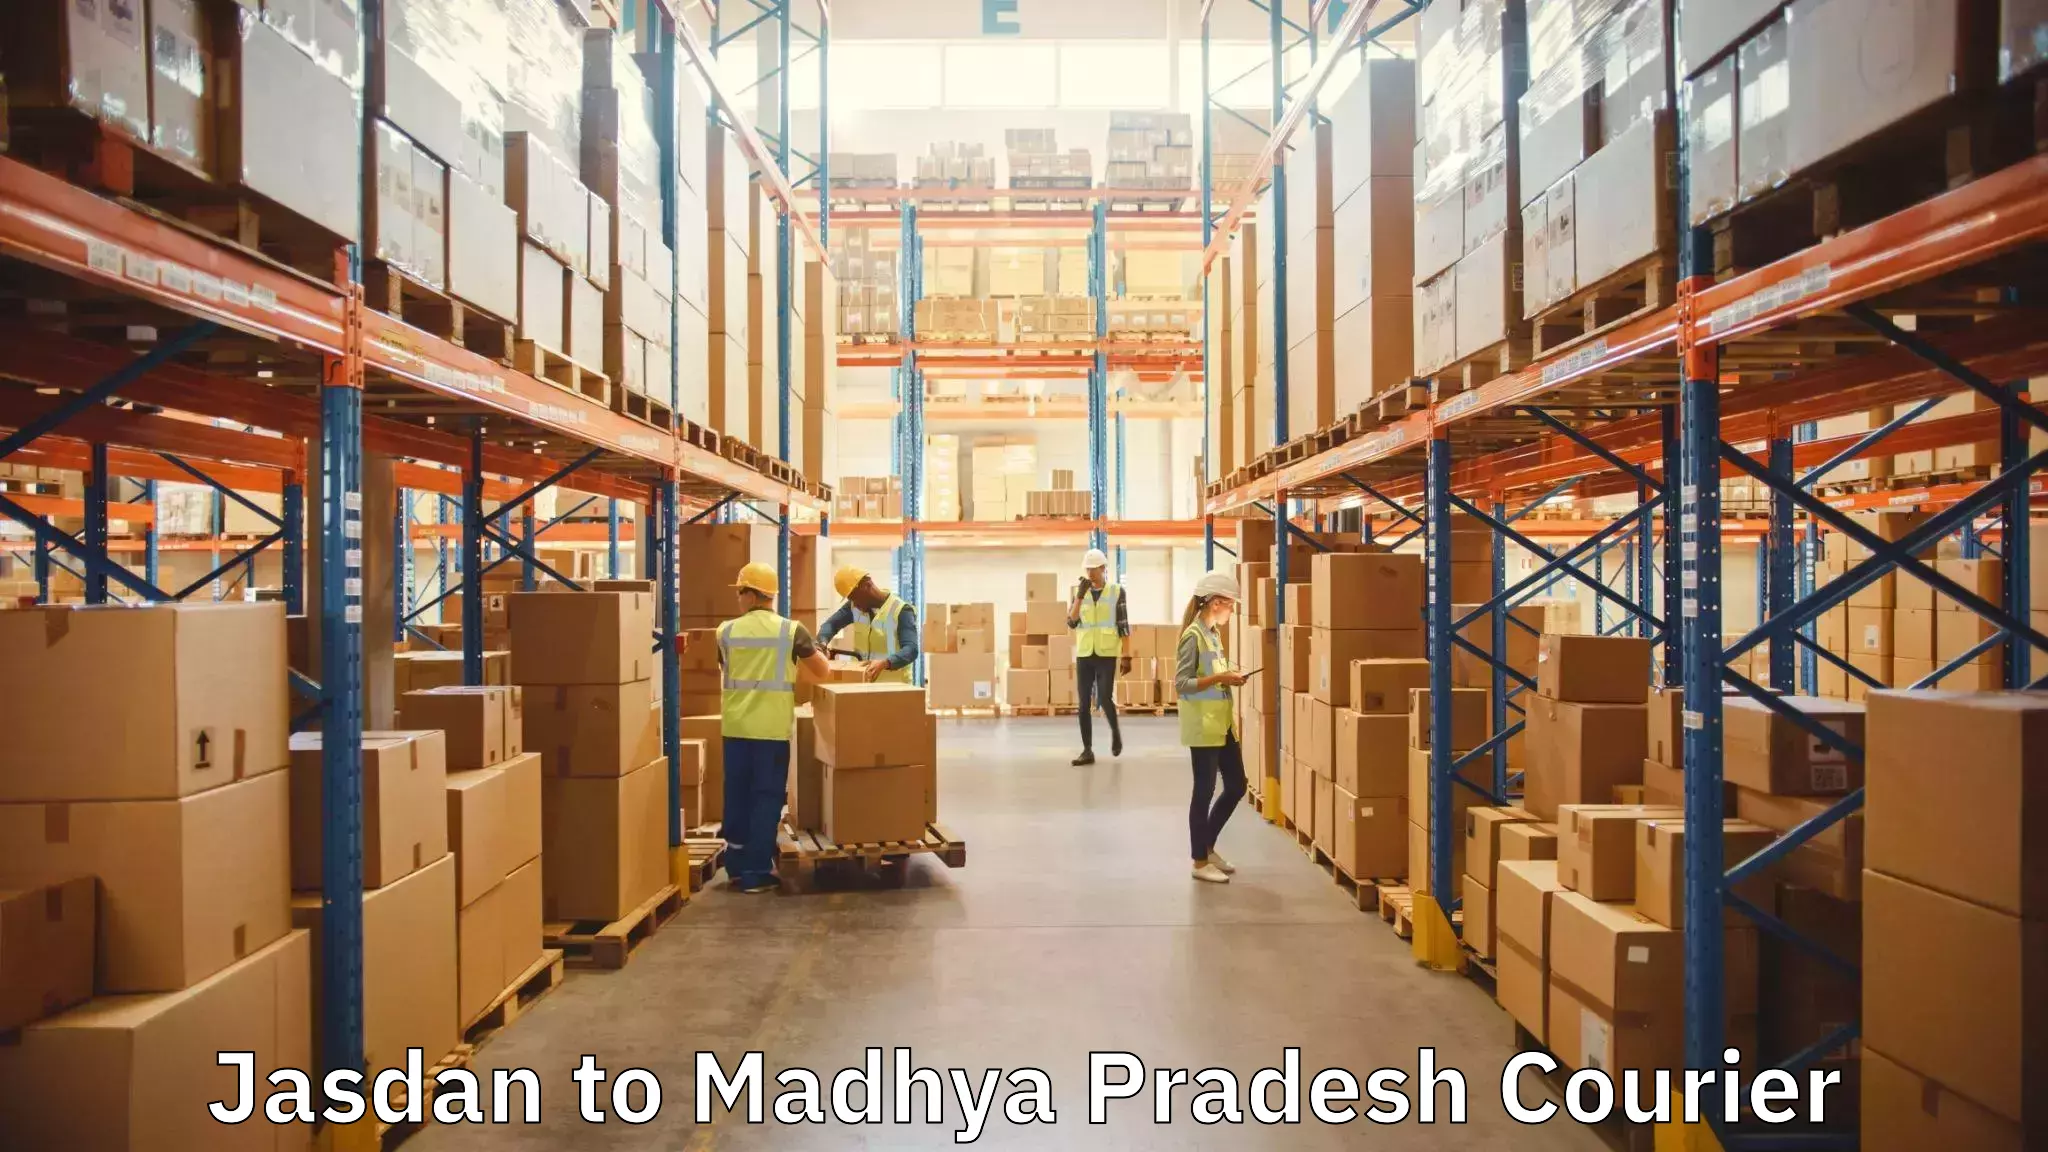 Professional moving company Jasdan to Chand Chaurai